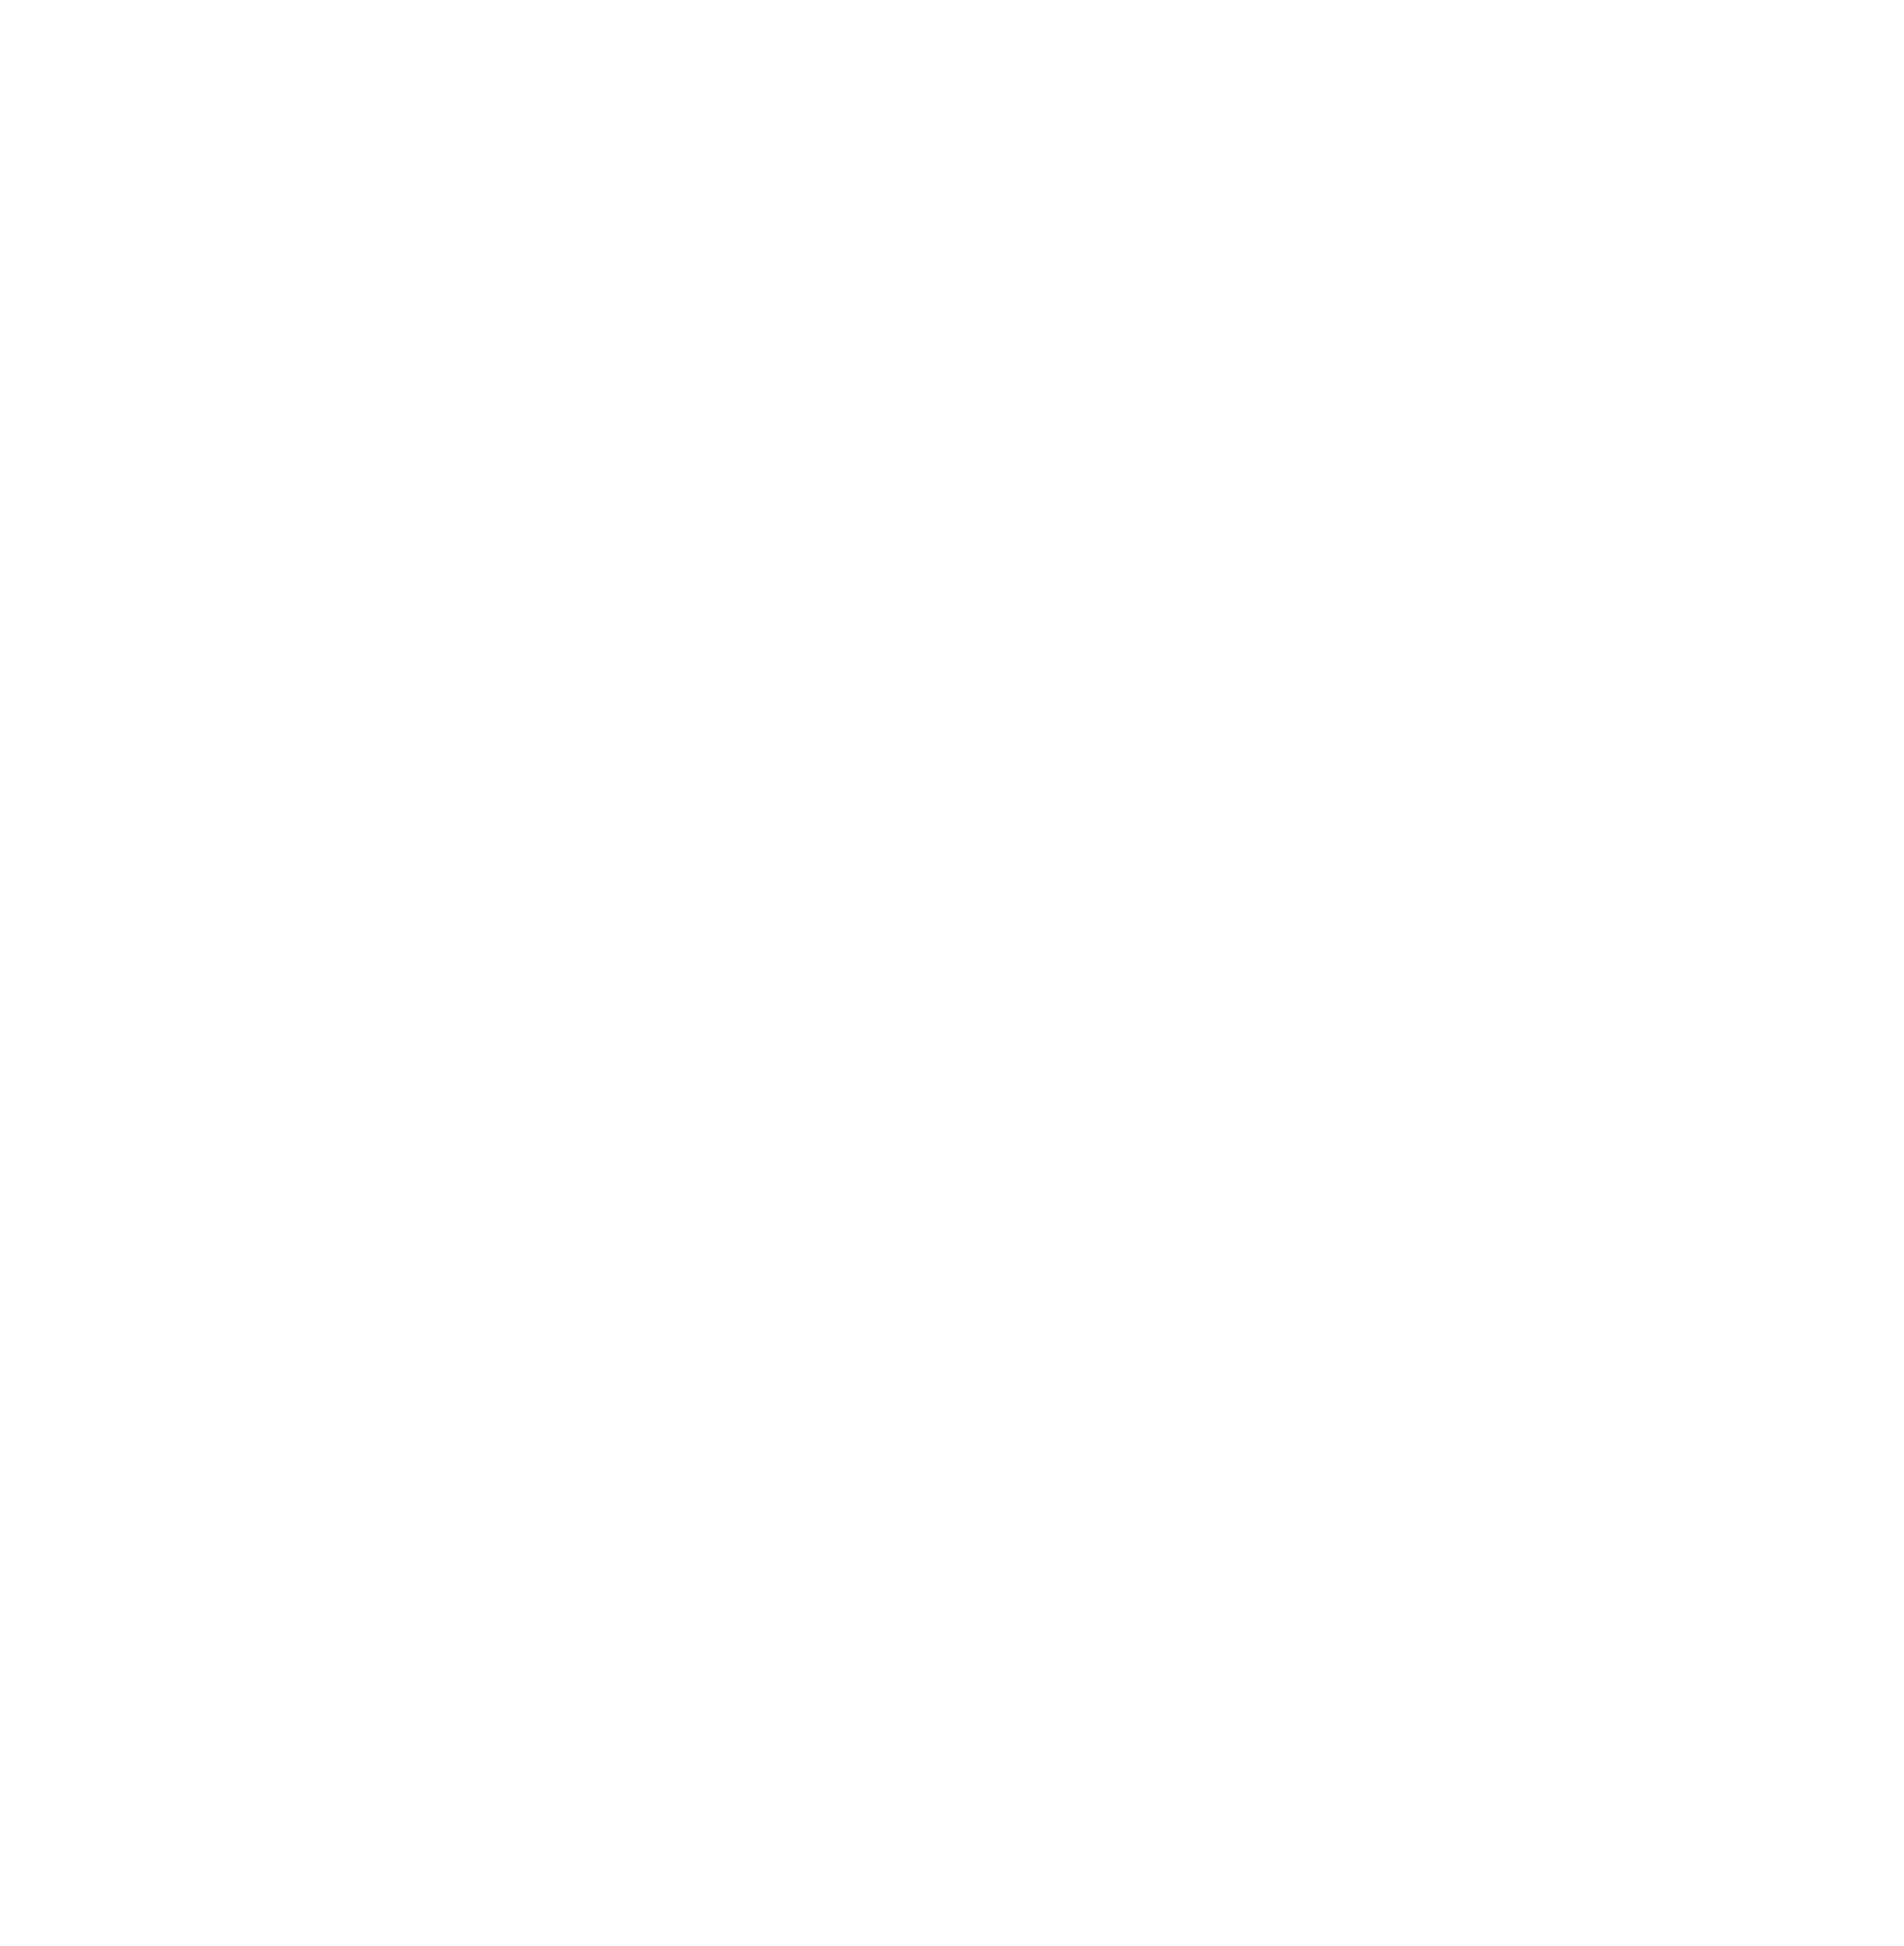 Logo of the X platform